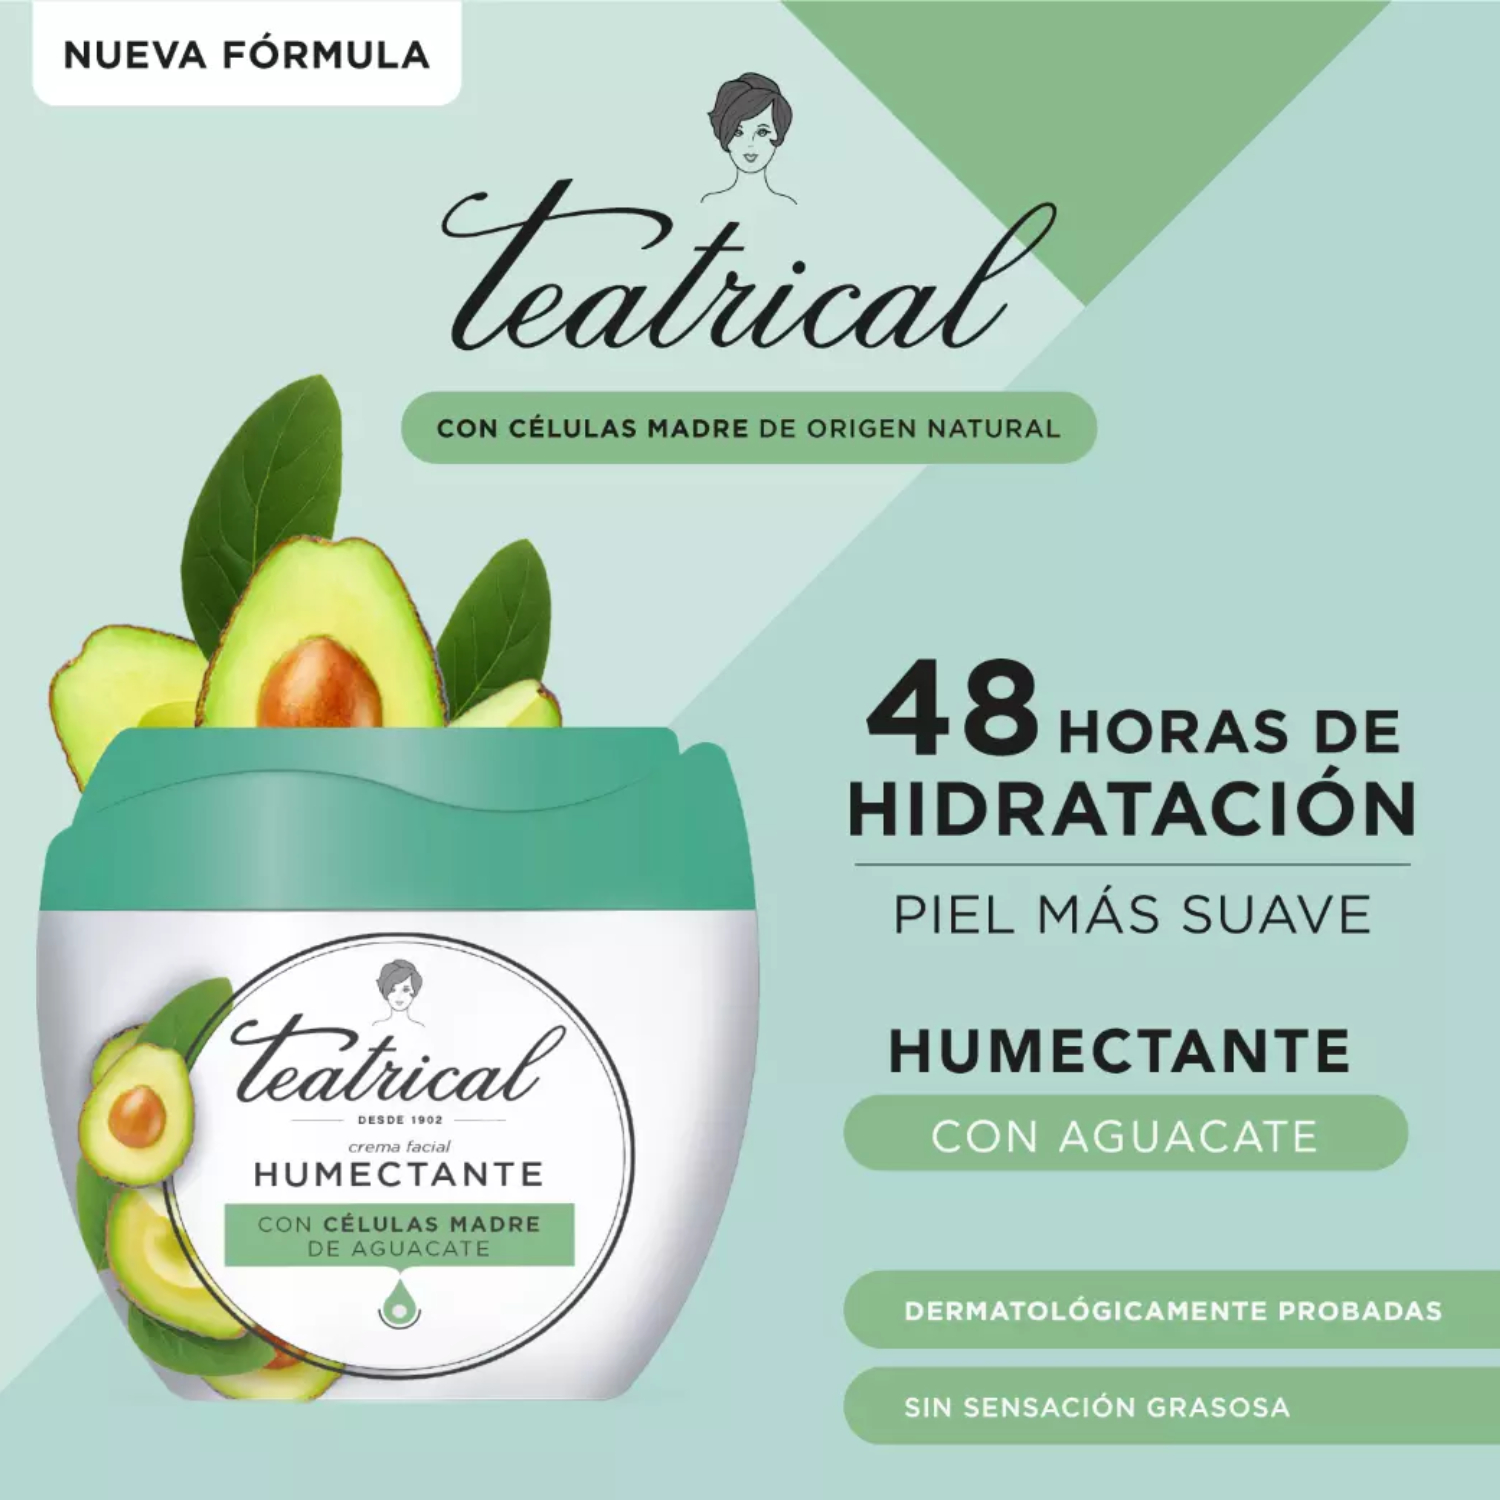 Teatrical crema facial humectante (200 g)